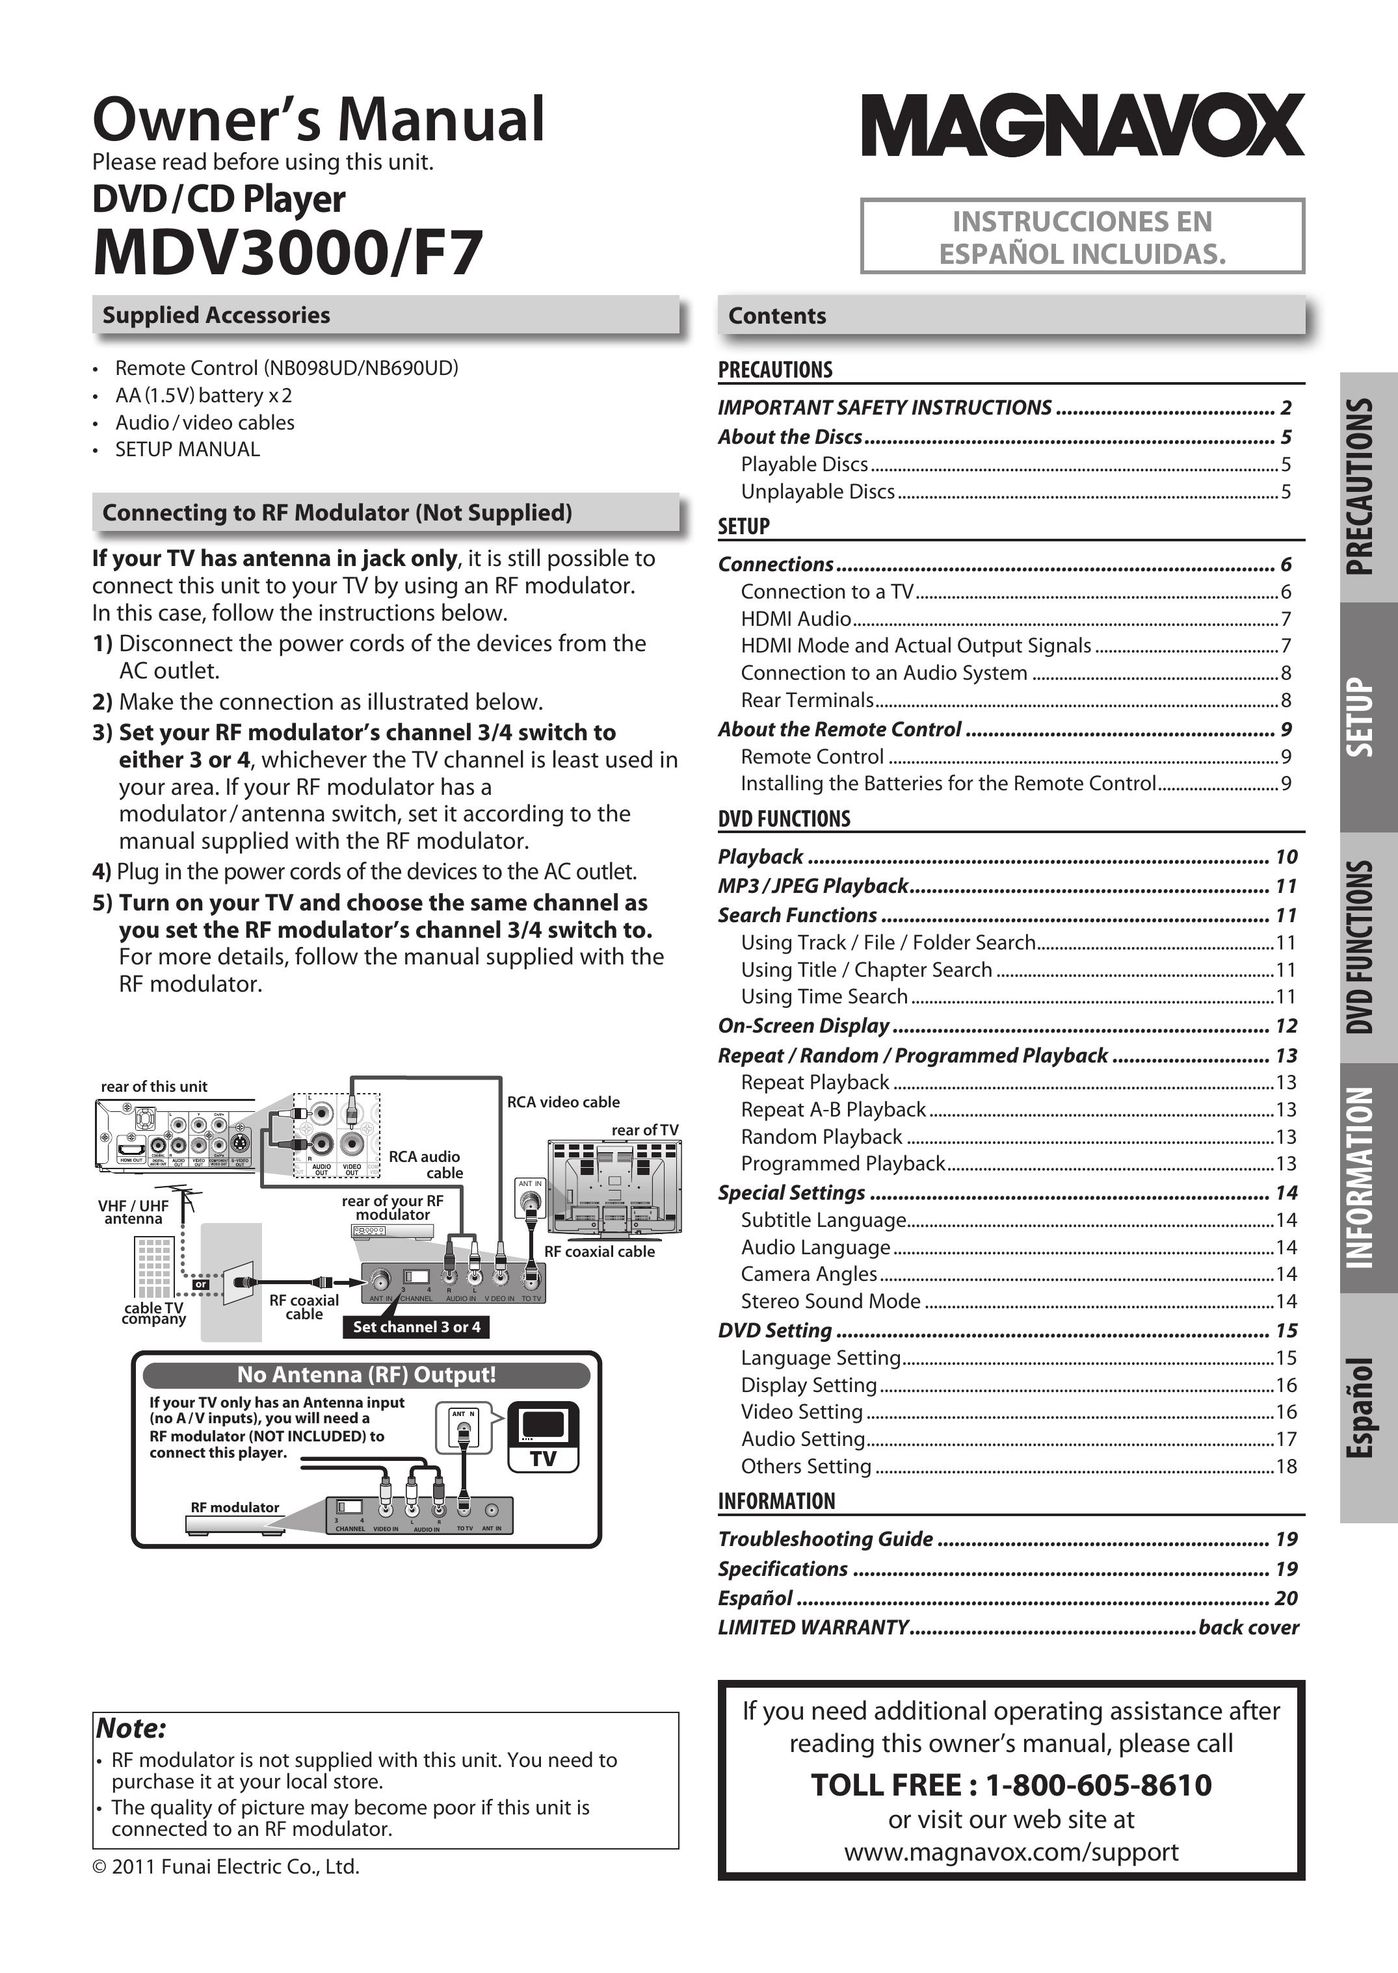 Magnavox MDV3000/F7 DVD Player User Manual